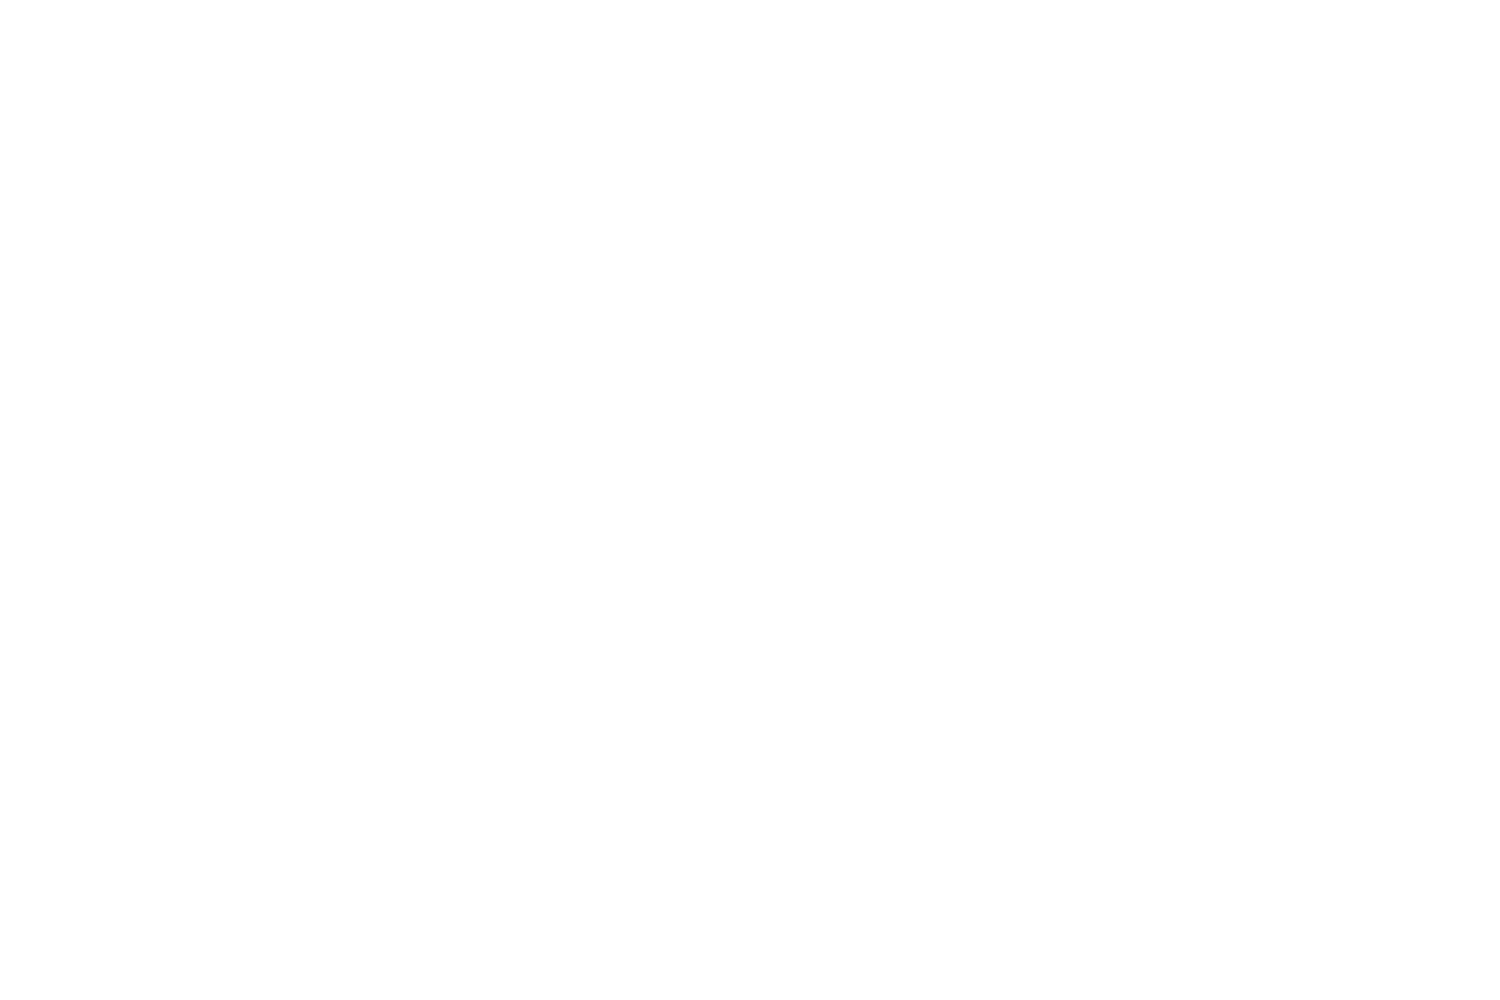 Kyle Wagener Photography